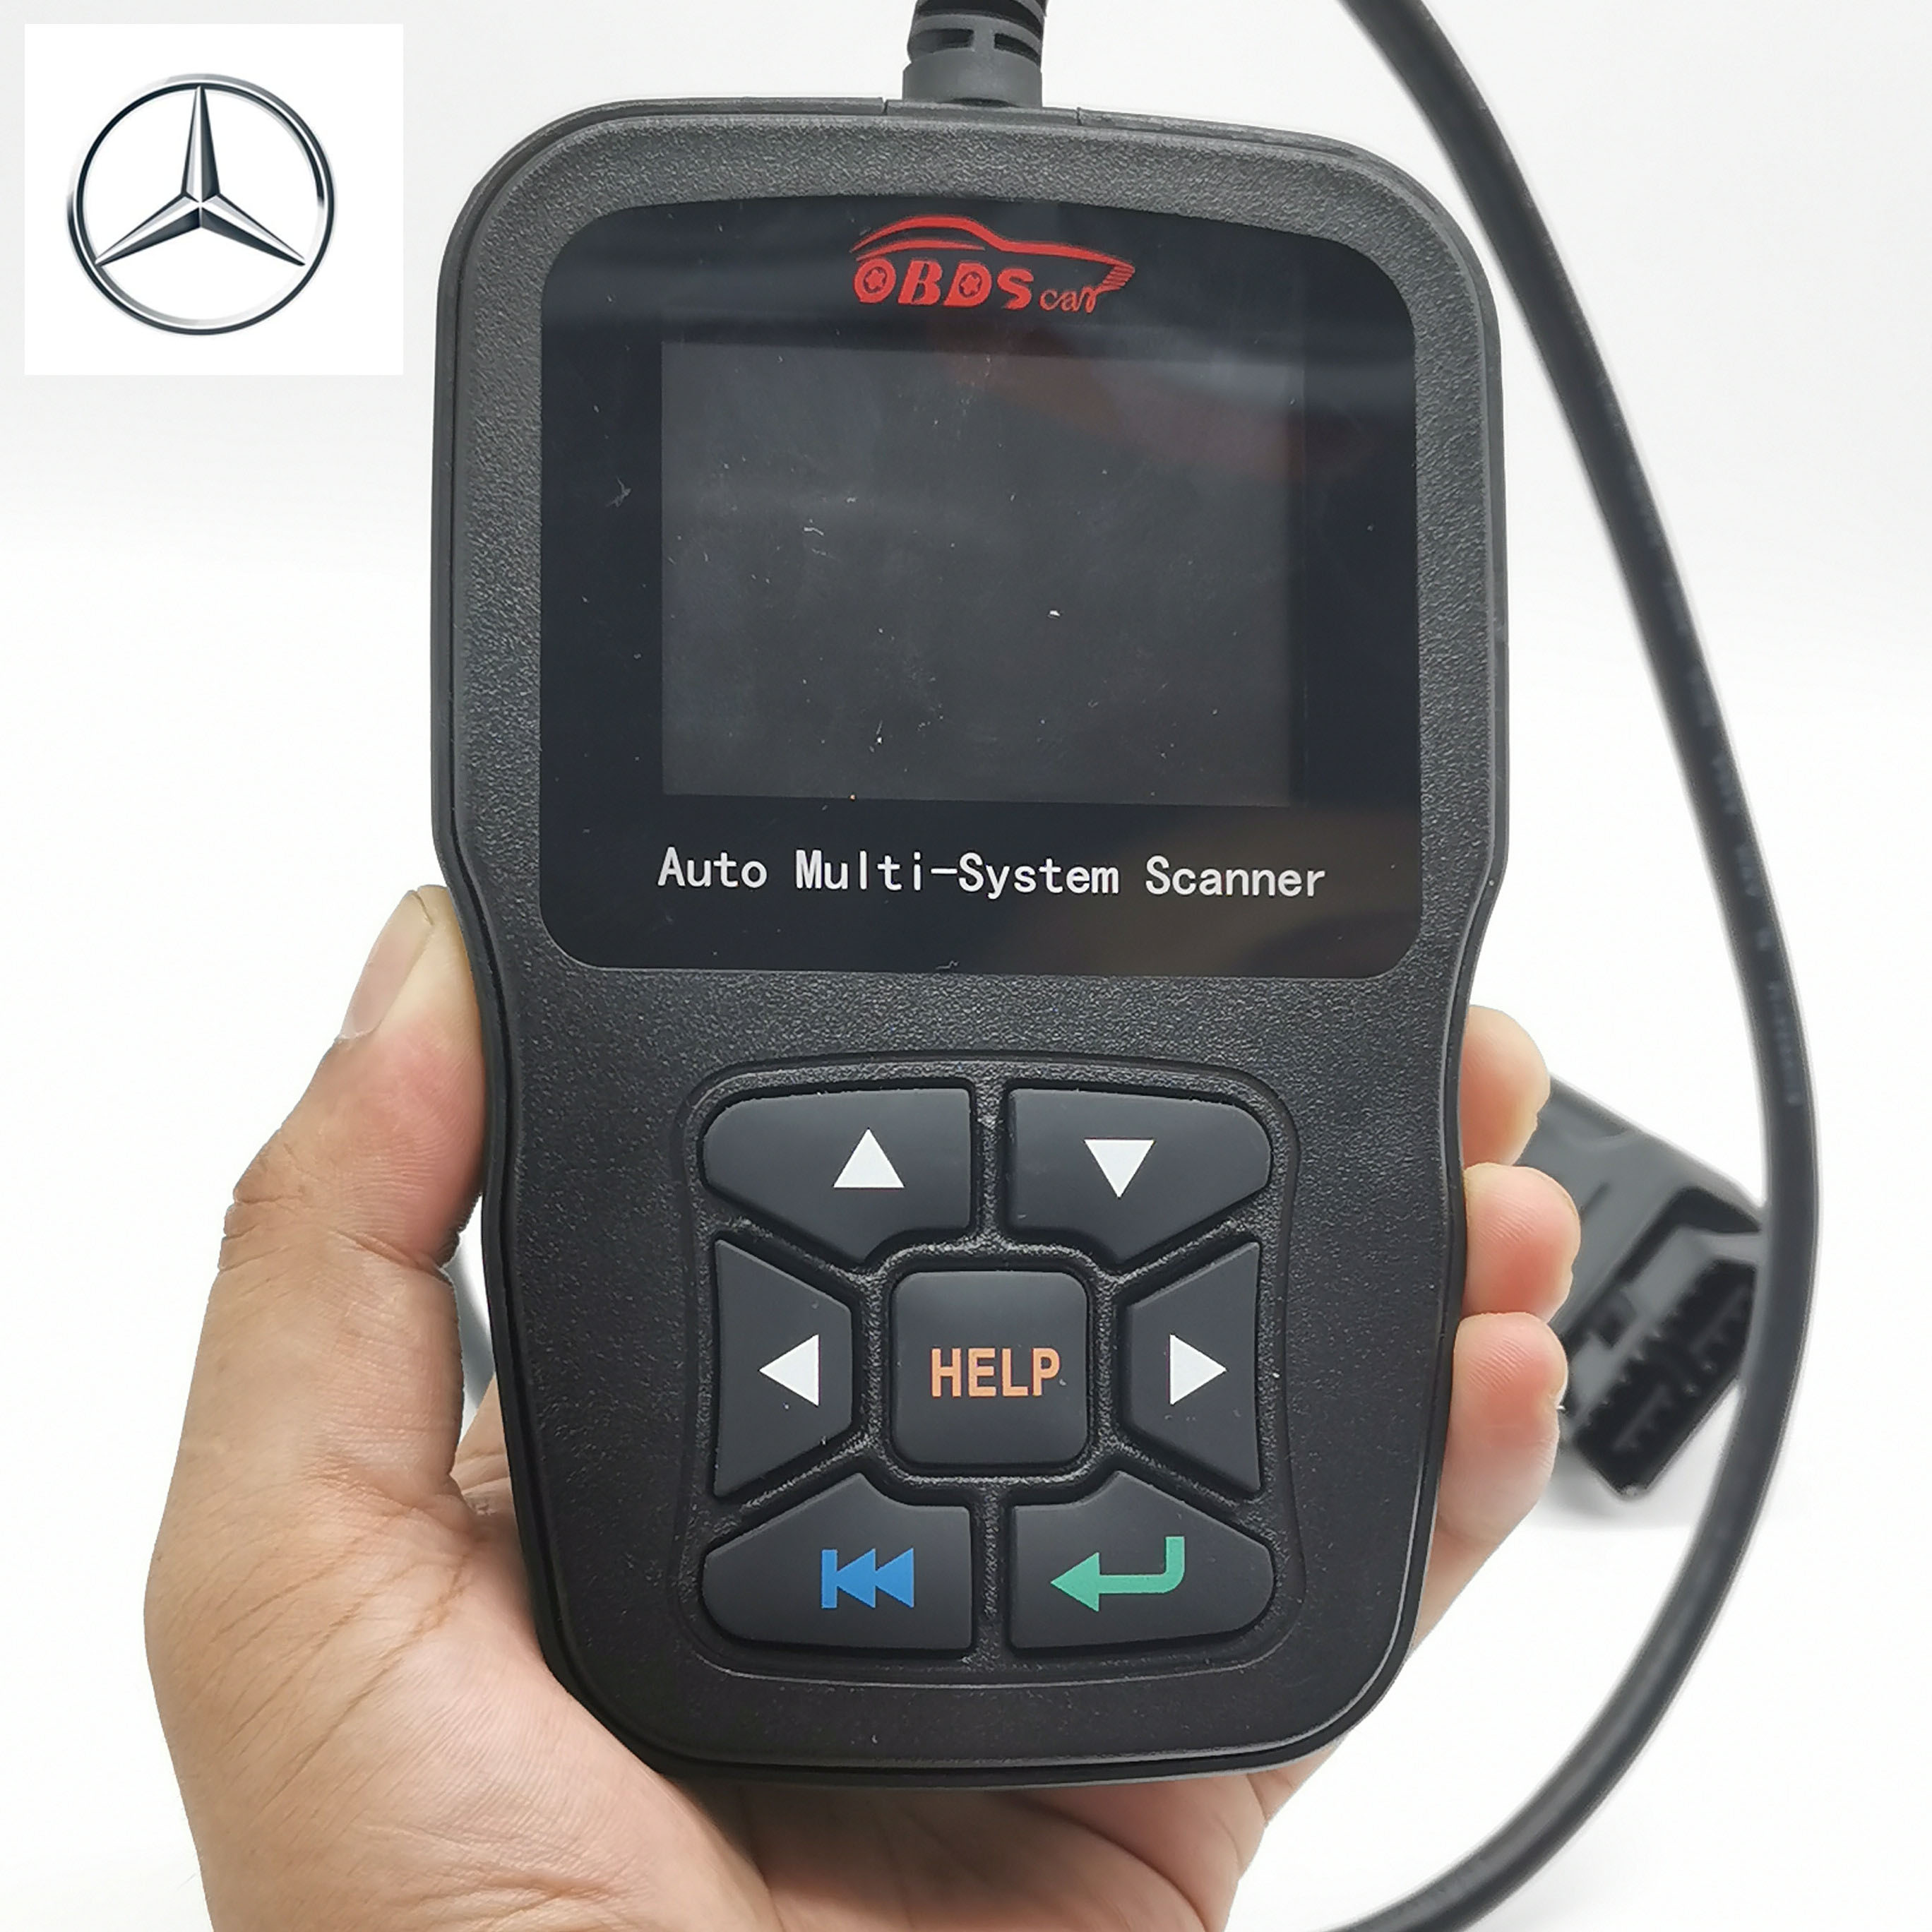 OS802 Benz Diagnostic Tool